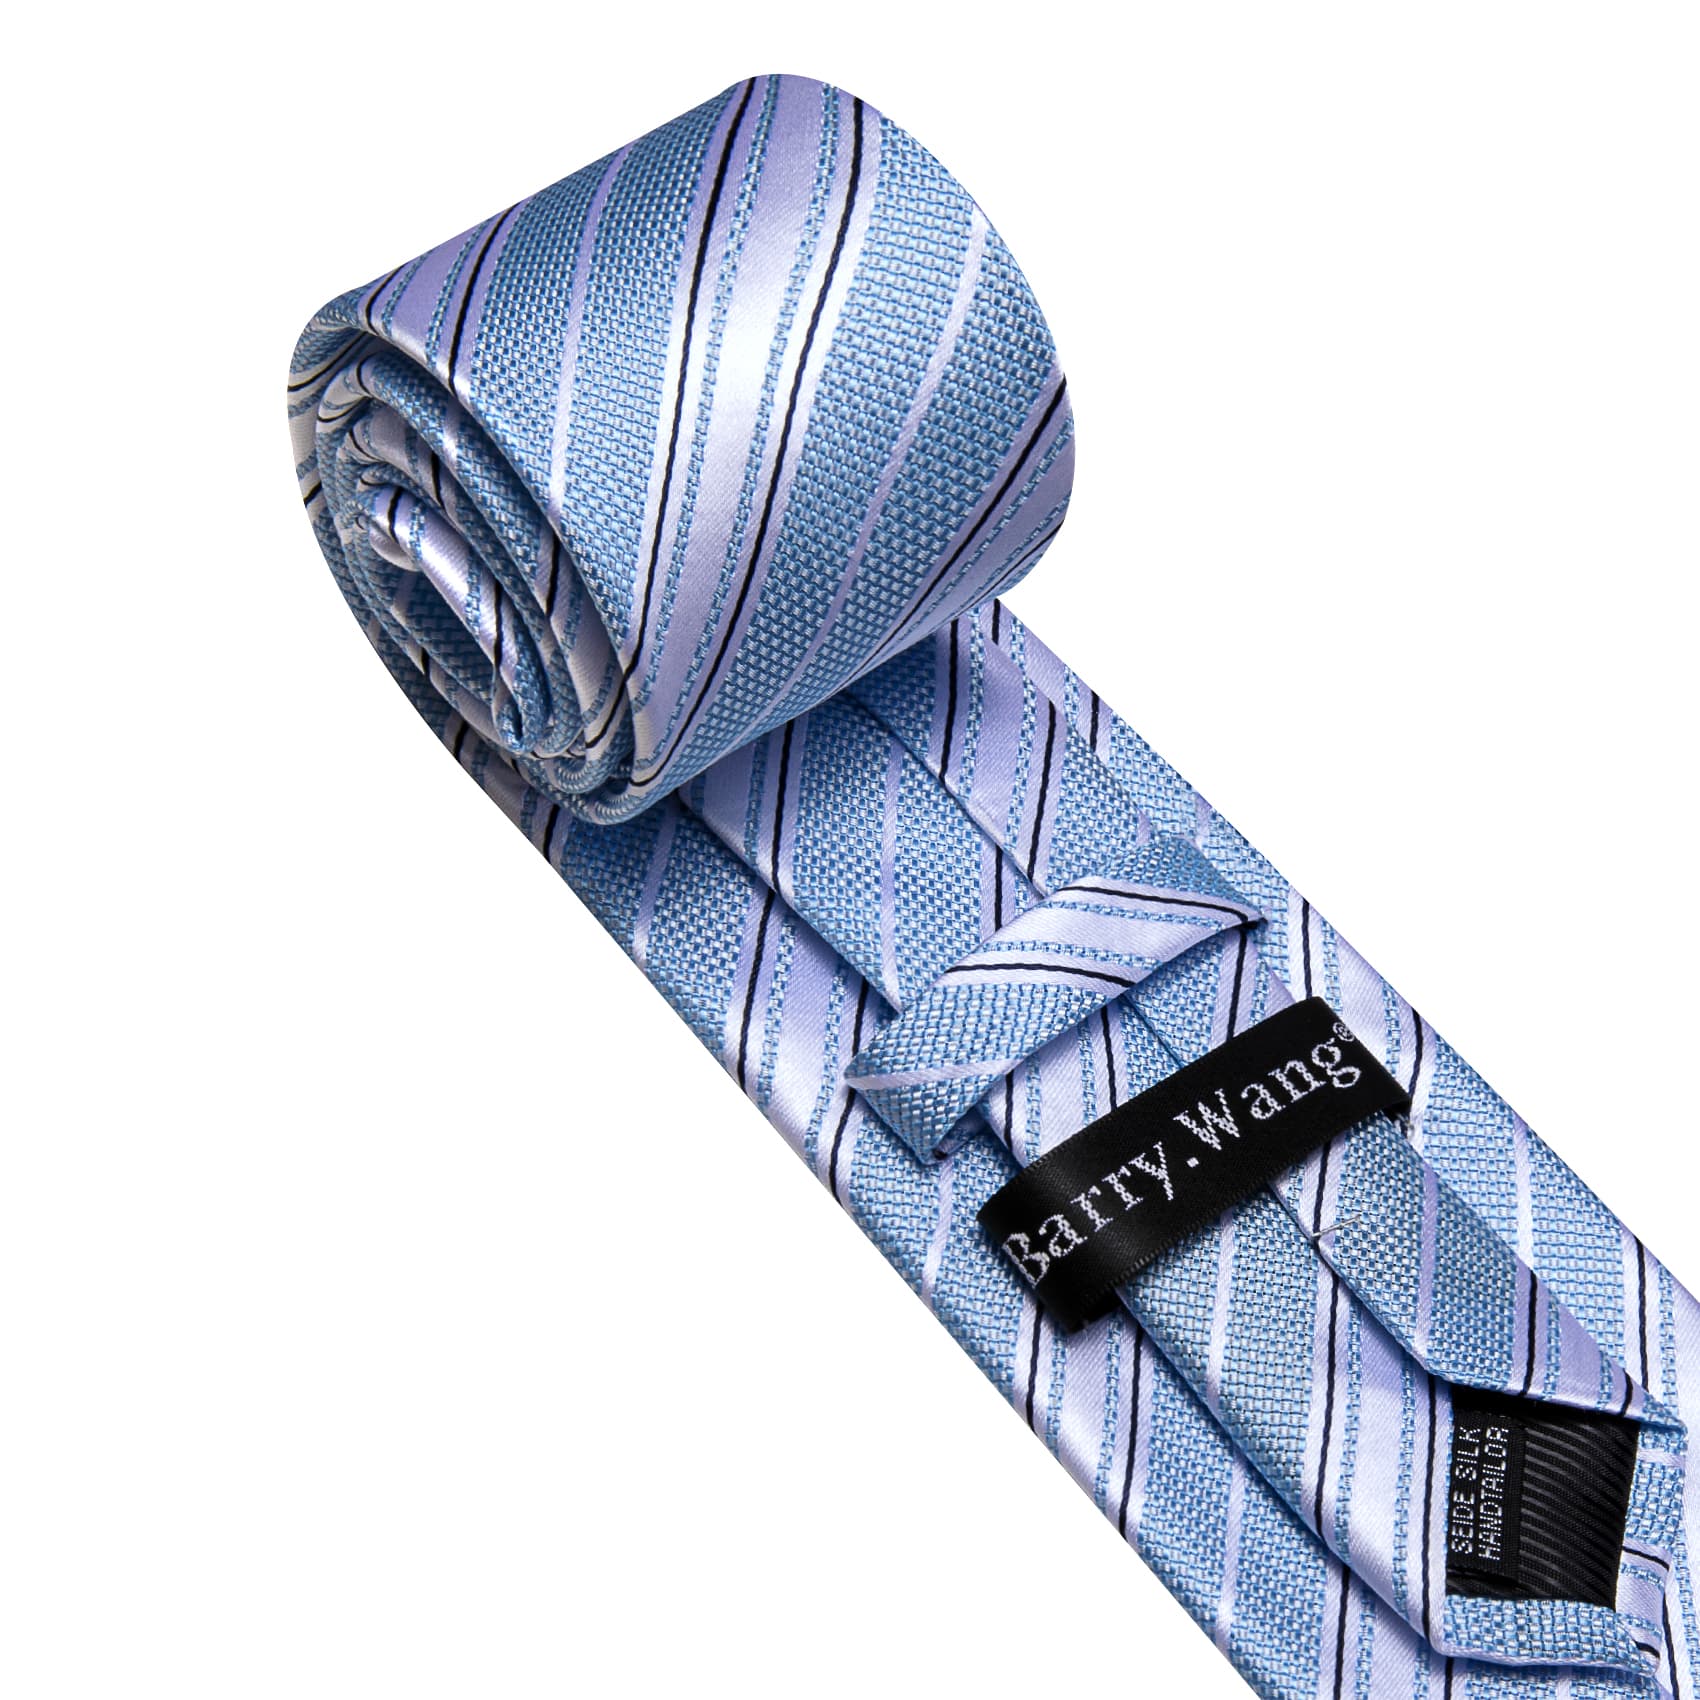 Sky Blue Silver Striped Men's Tie Handkerchief Pocket Set